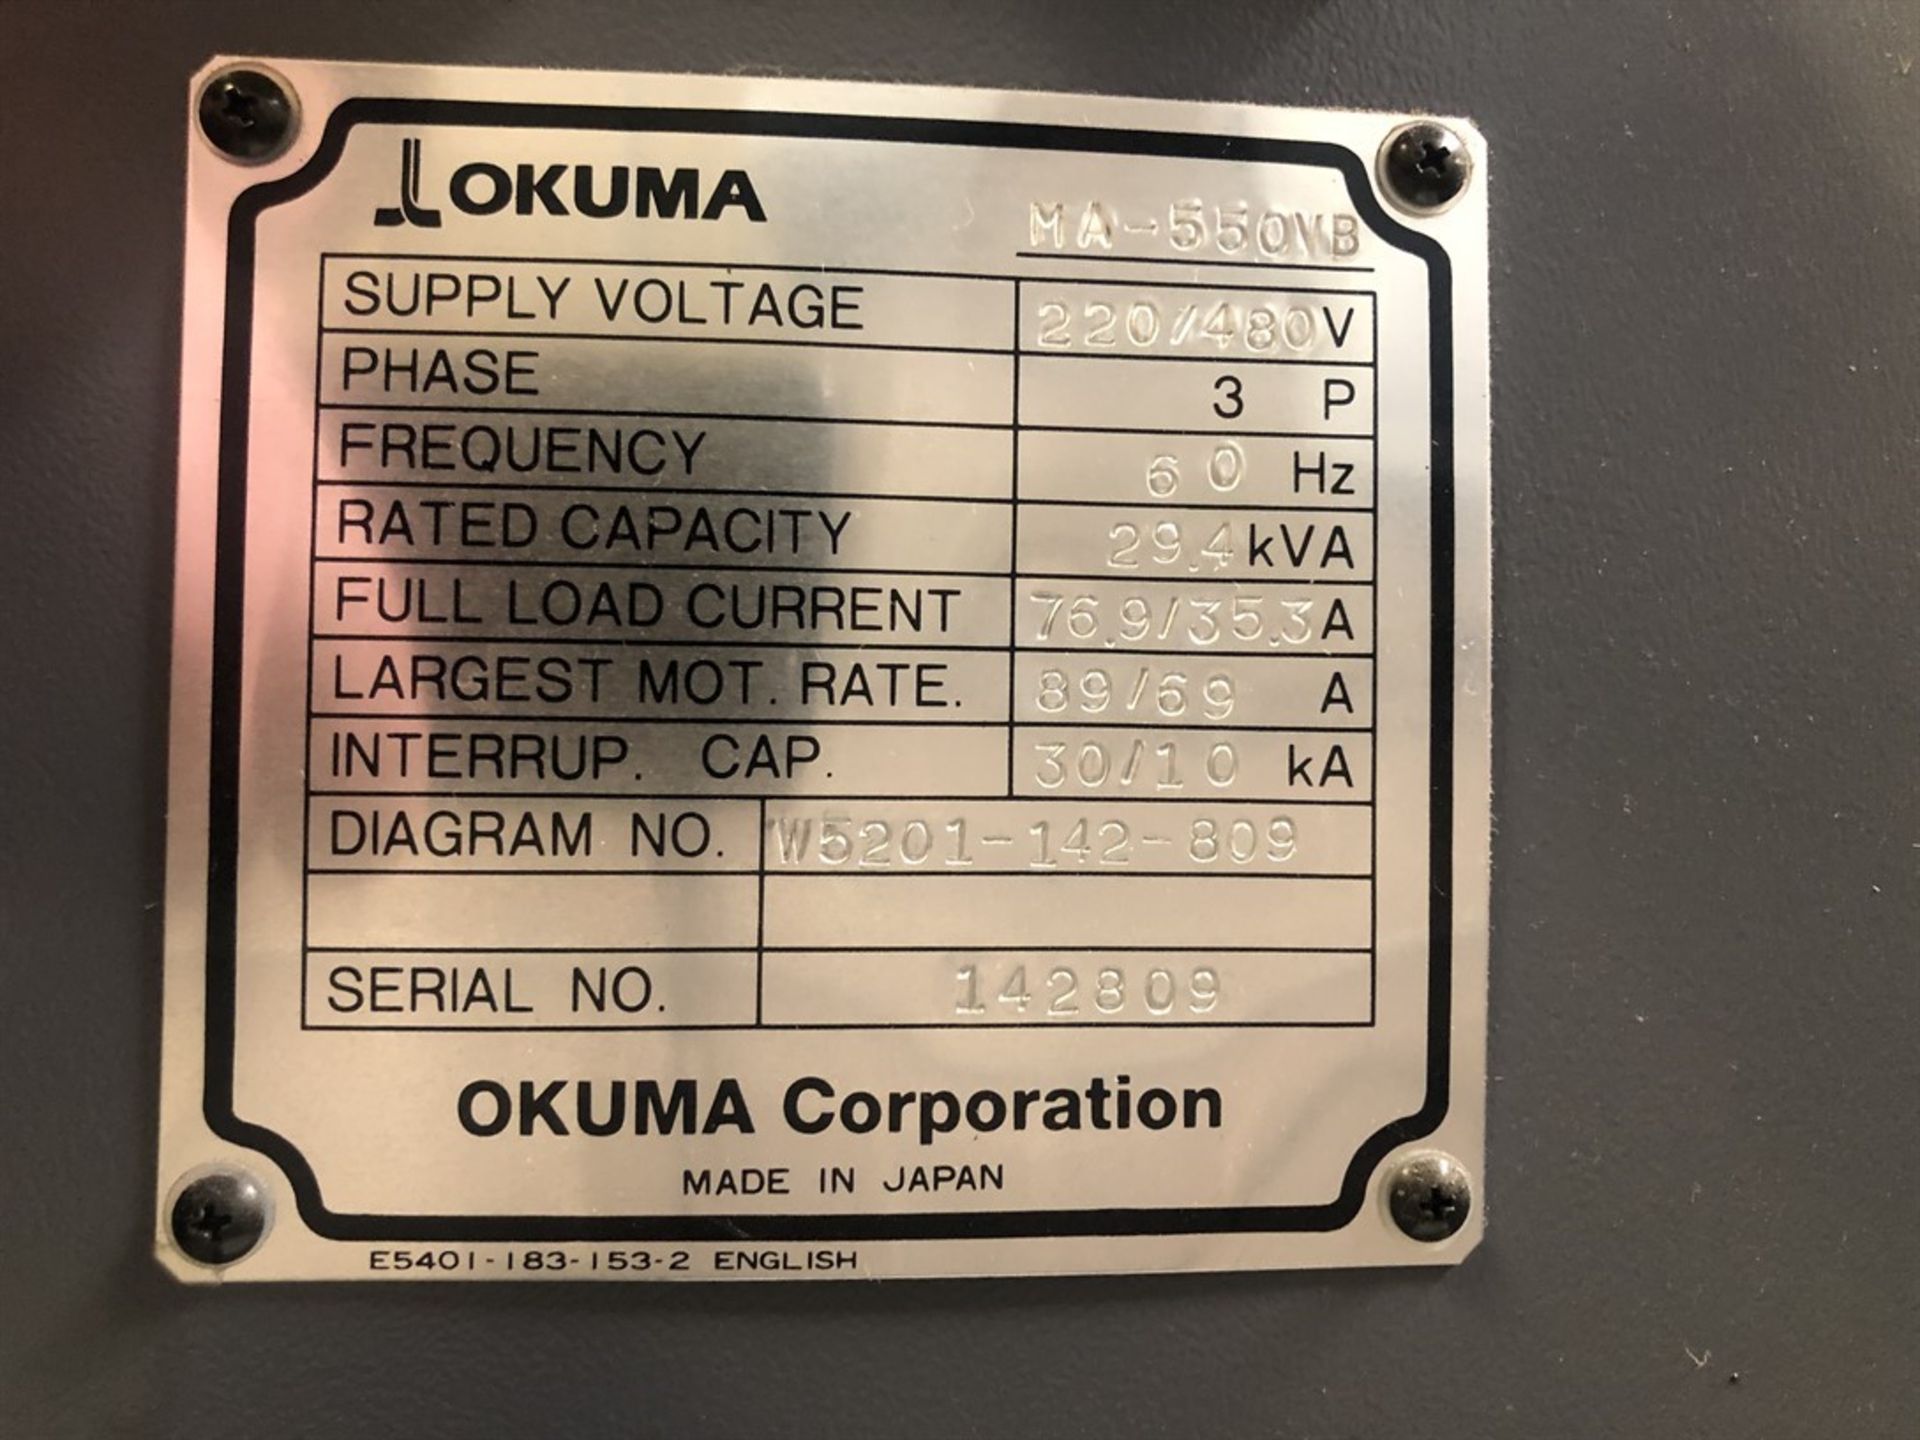 2008 OKUMA MA-550VB Vertical Machining Center, s/n 142809, OSP-P200M Control, 22” x 51” Table, - Image 11 of 12